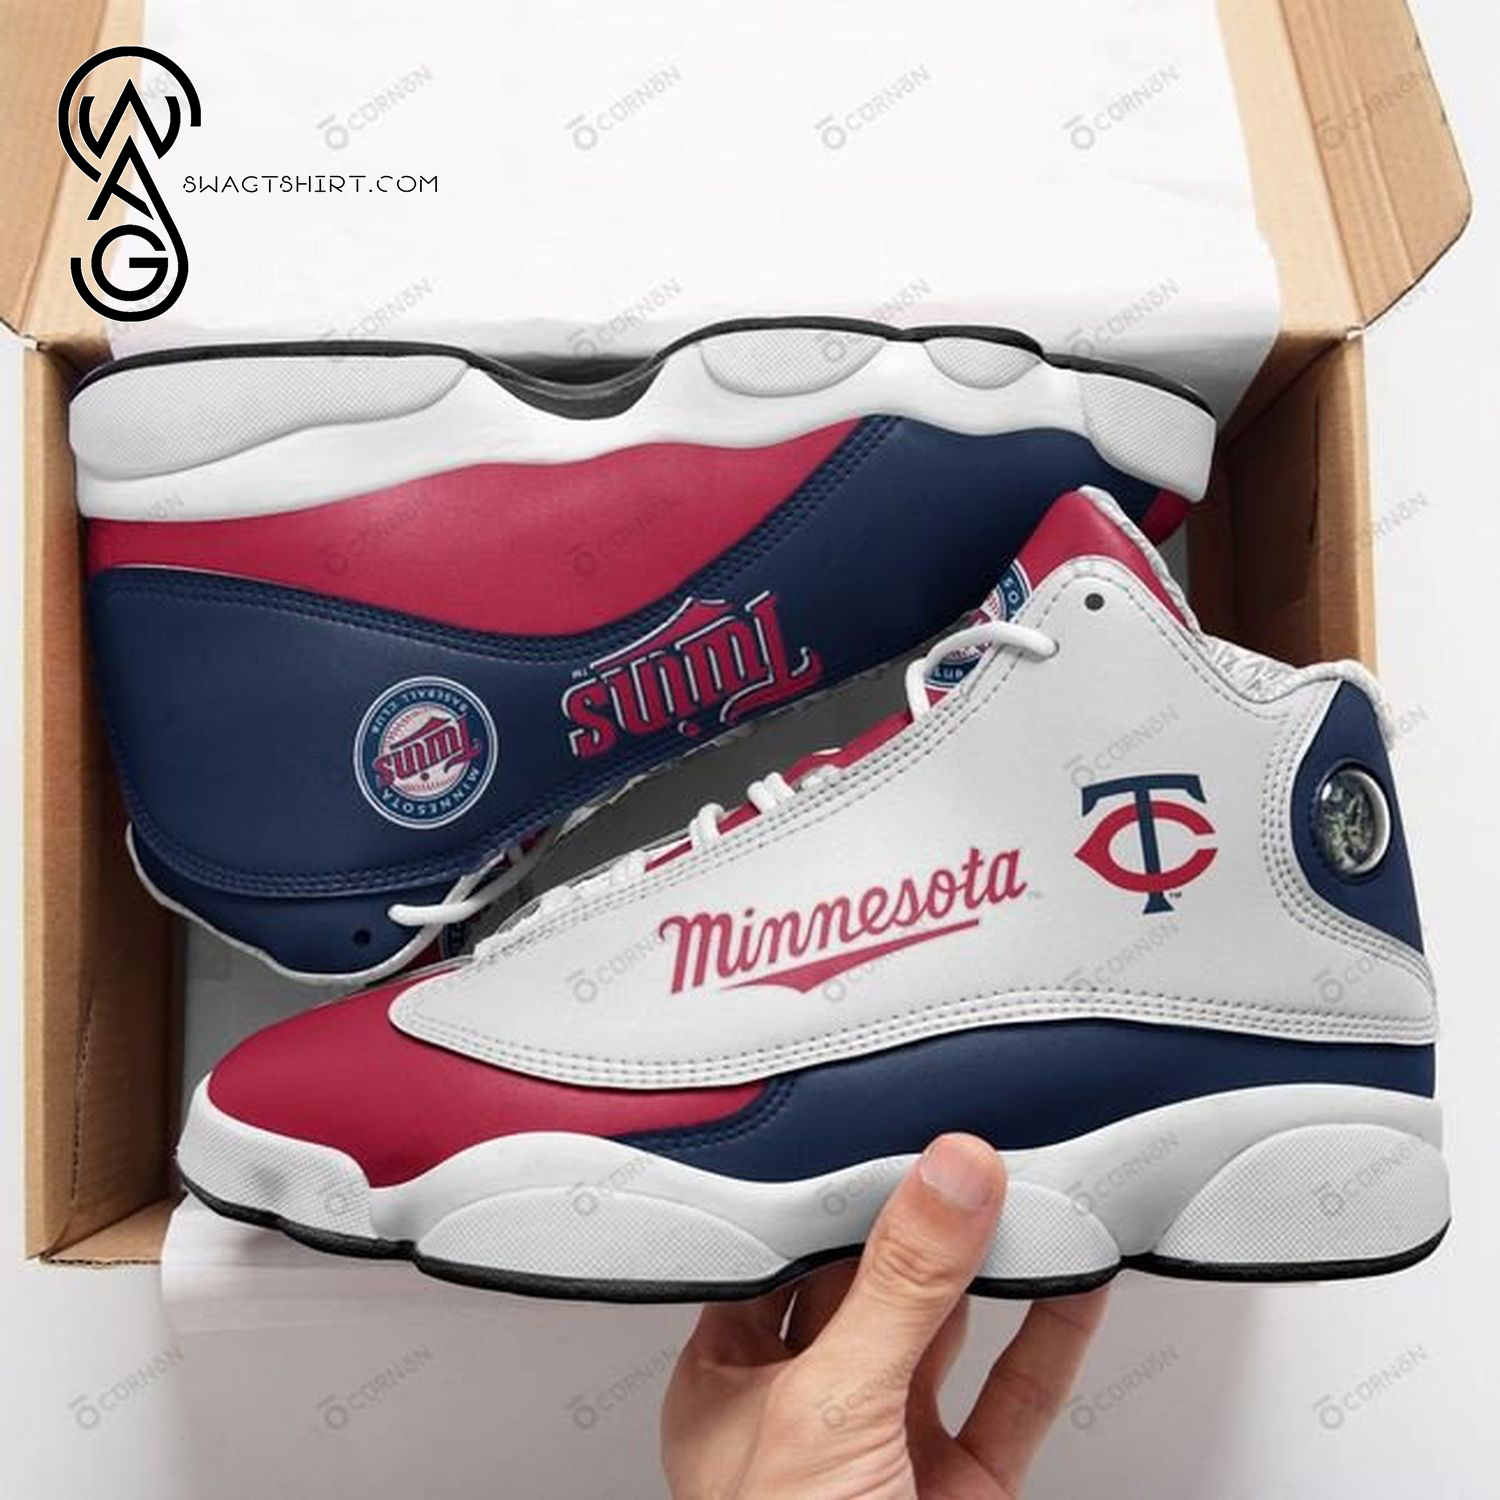 MLB Minnesota Twins Air Jordan 13 Shoes